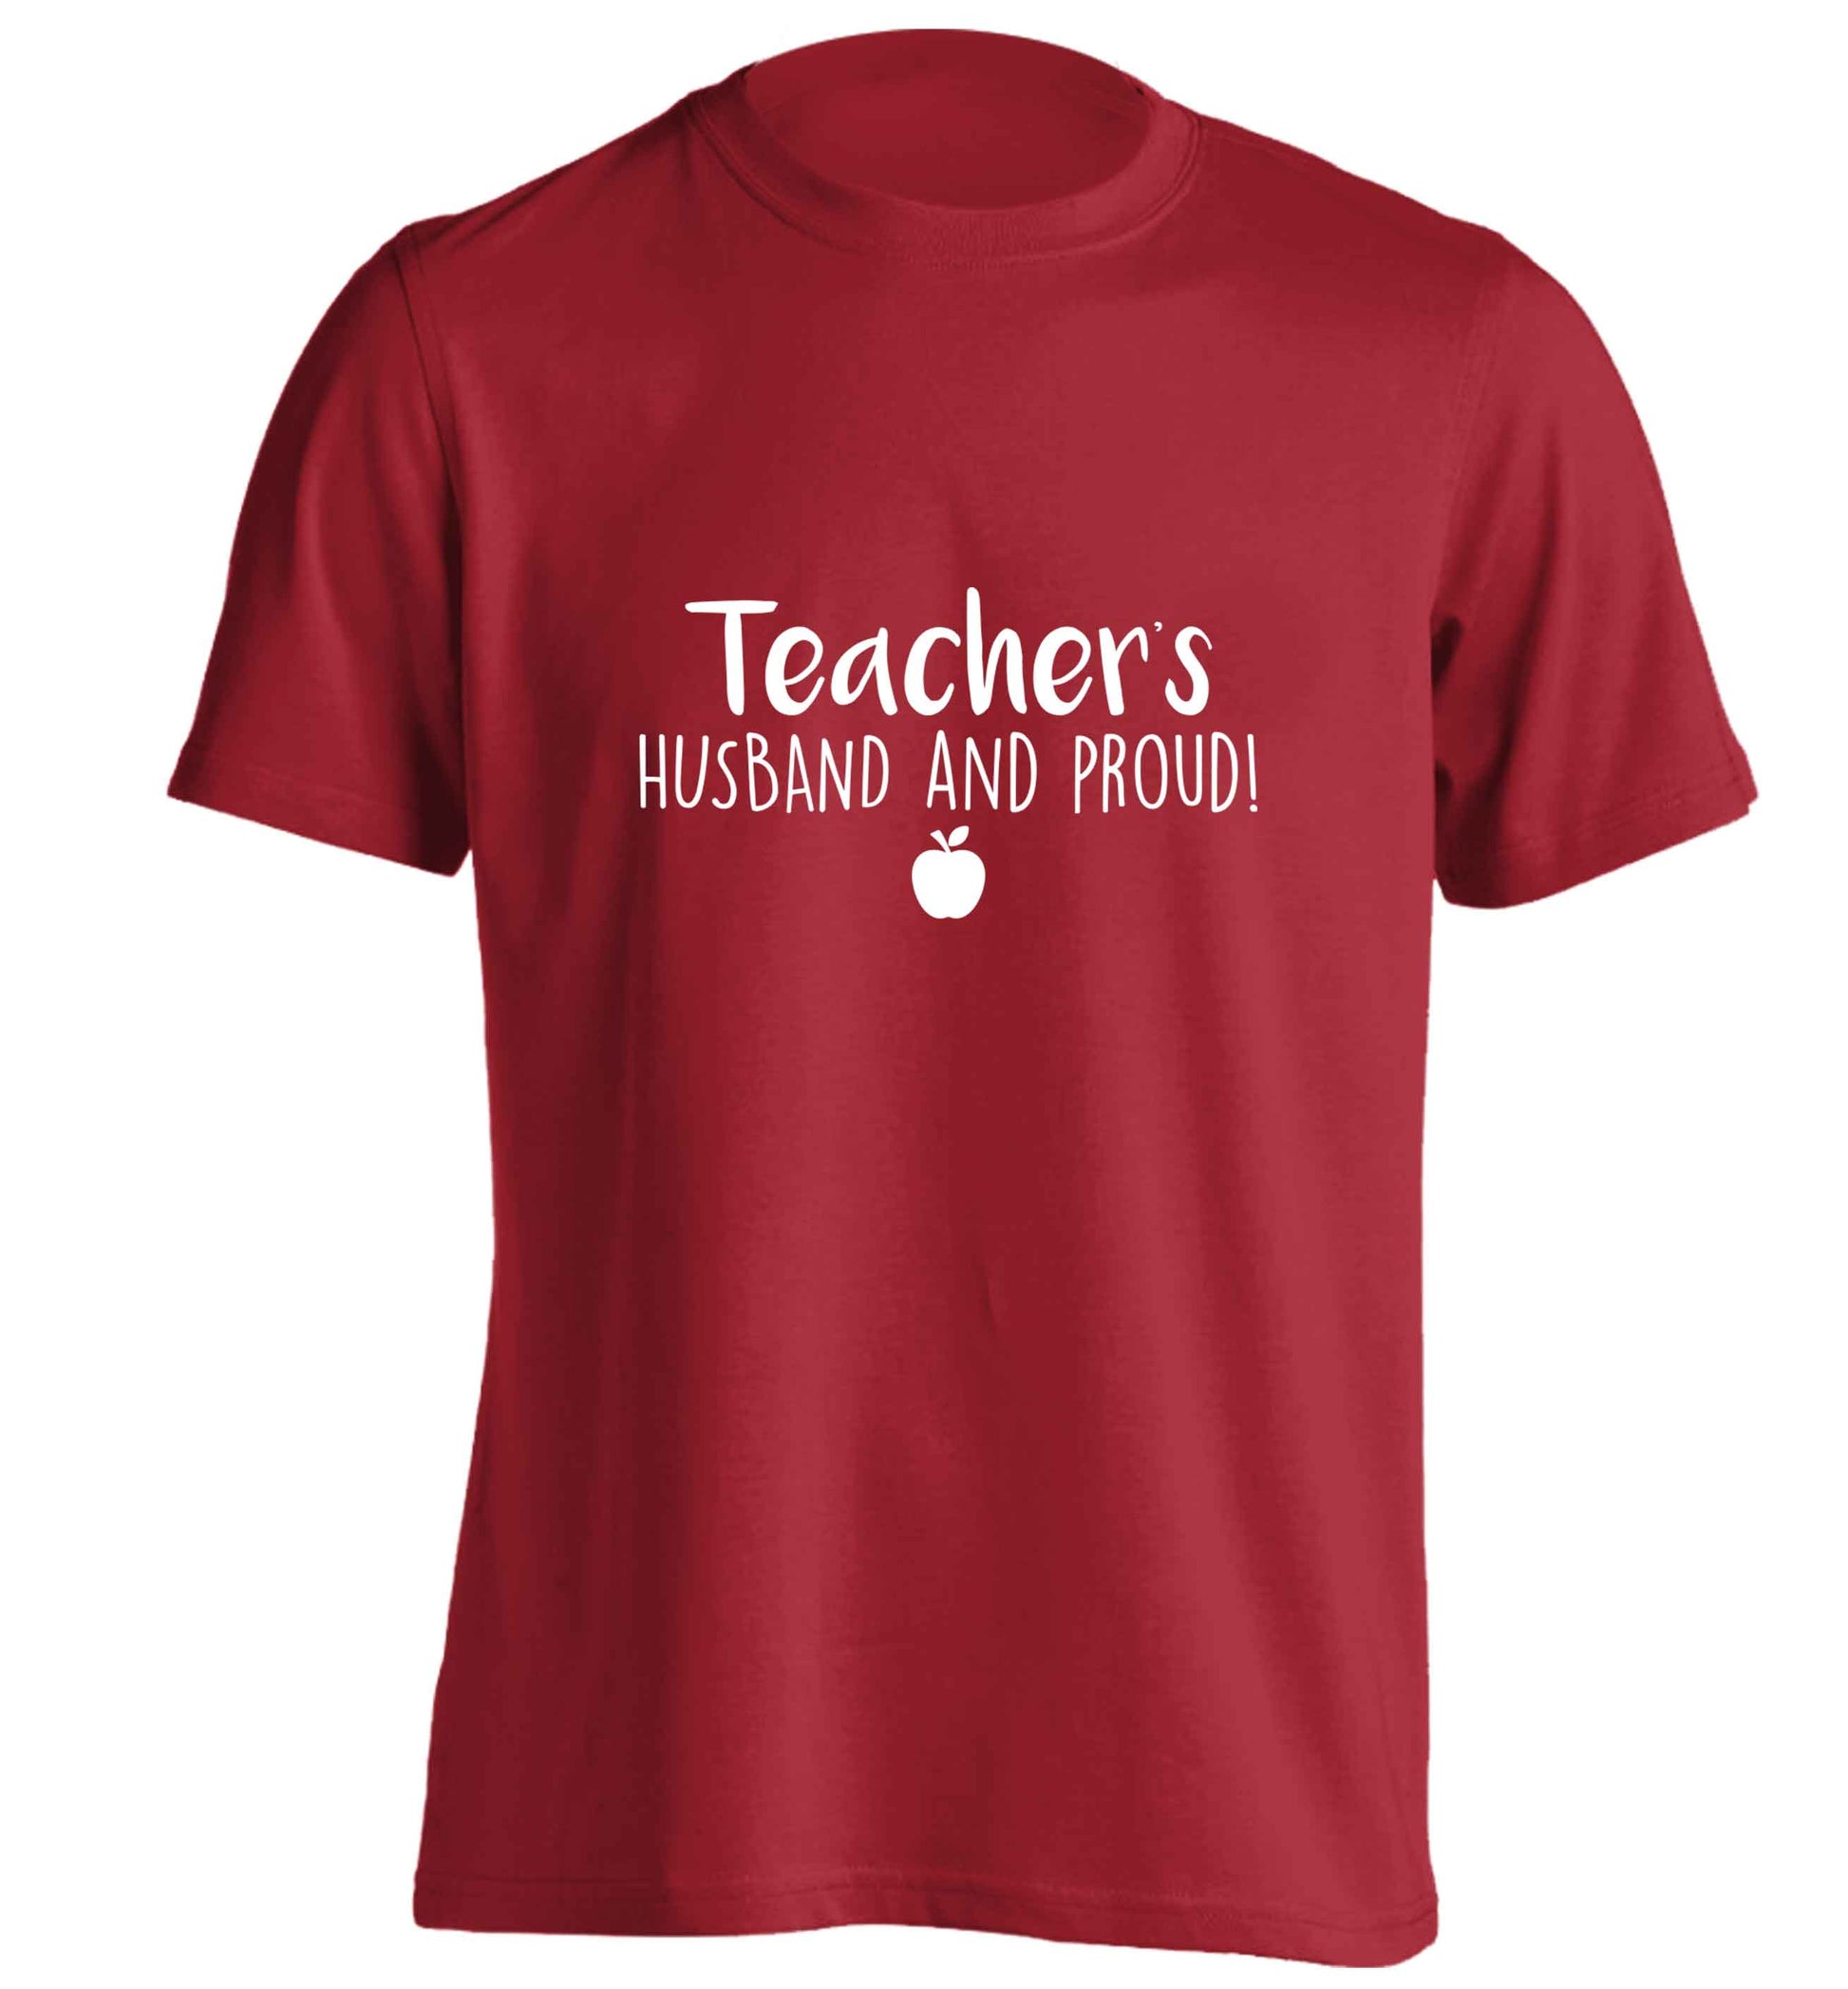 Teachers husband and proud adults unisex red Tshirt 2XL